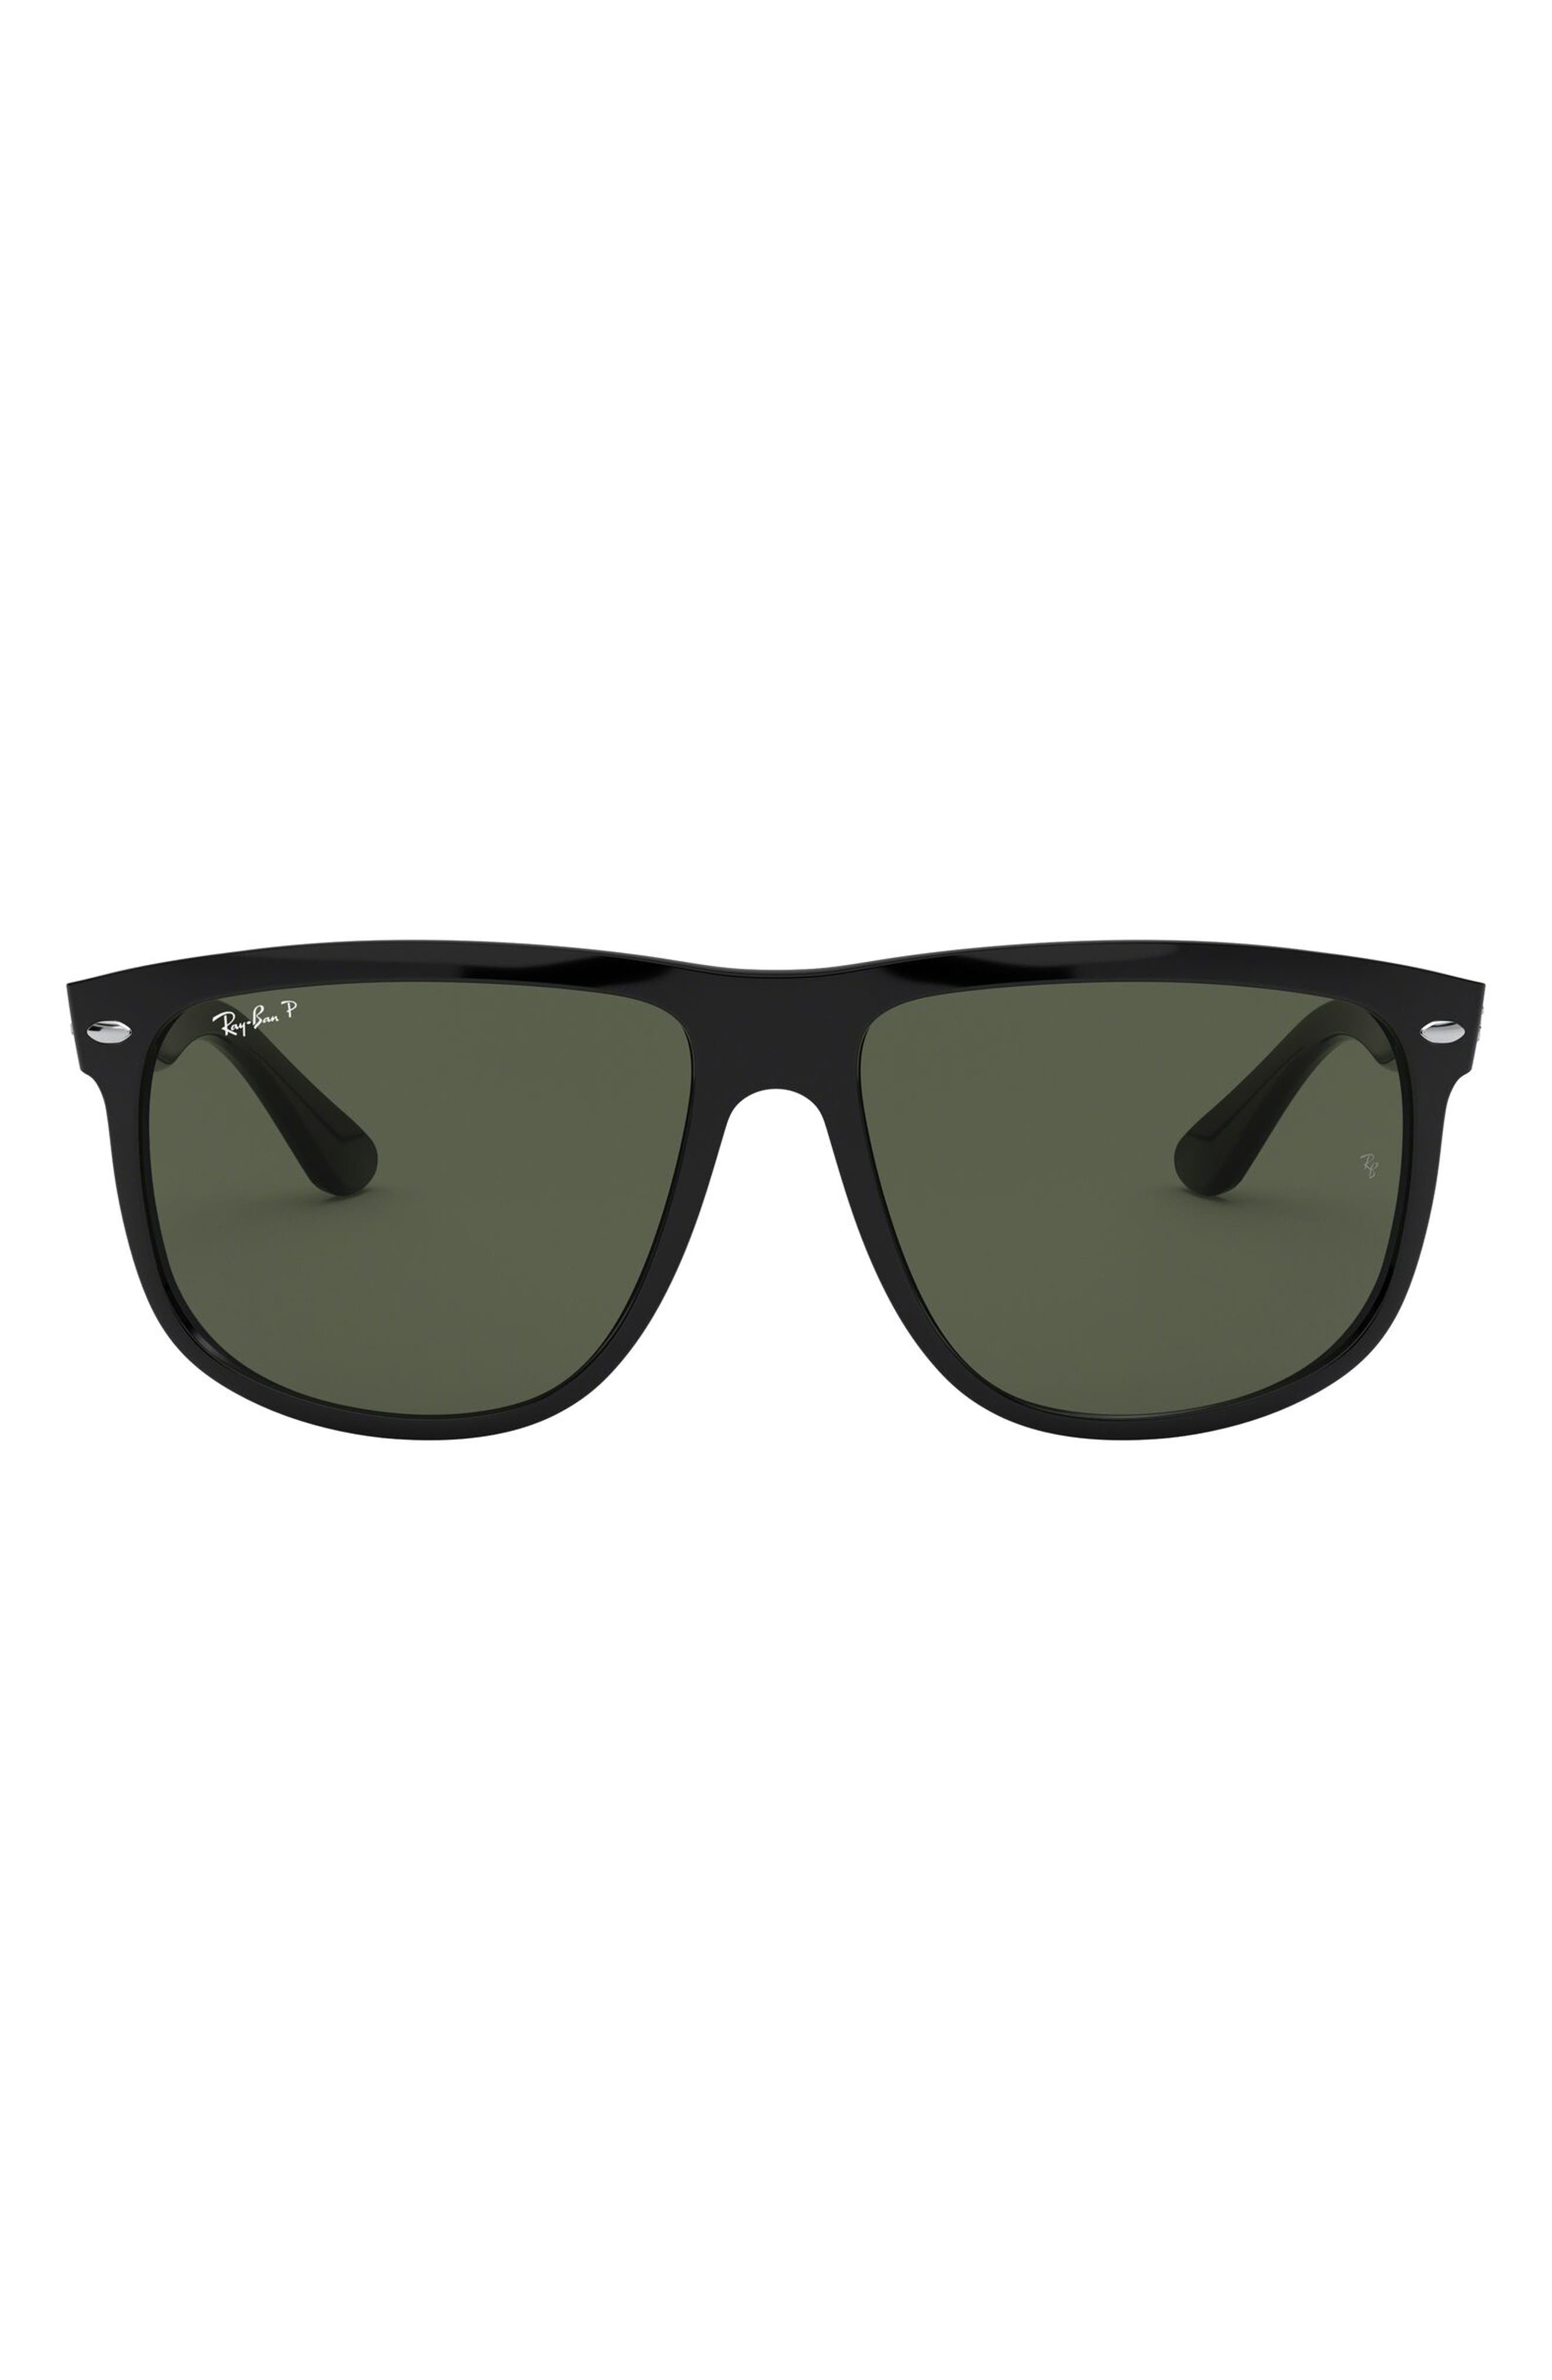 ladies ray ban wayfarer sunglasses